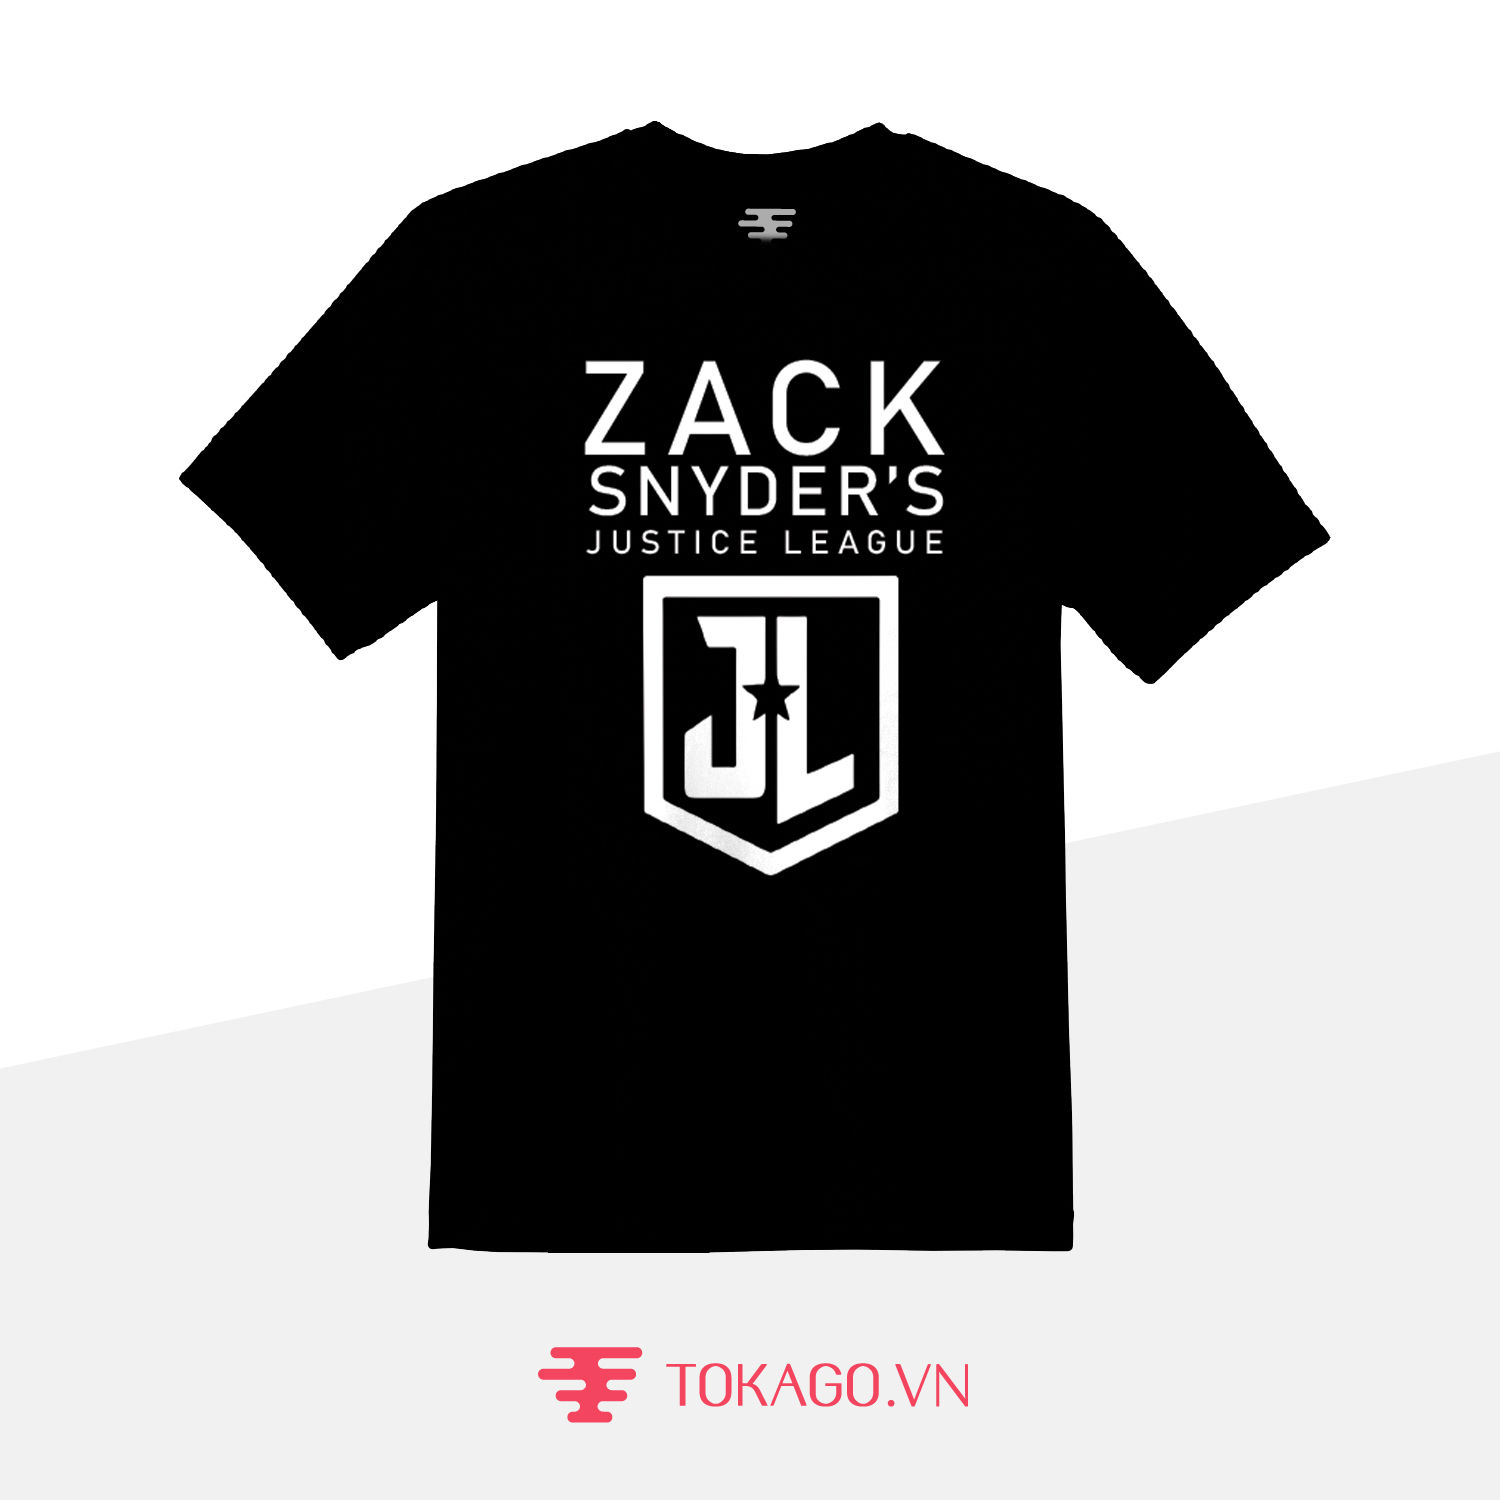 Zack Snyder's Justice League Tshirt